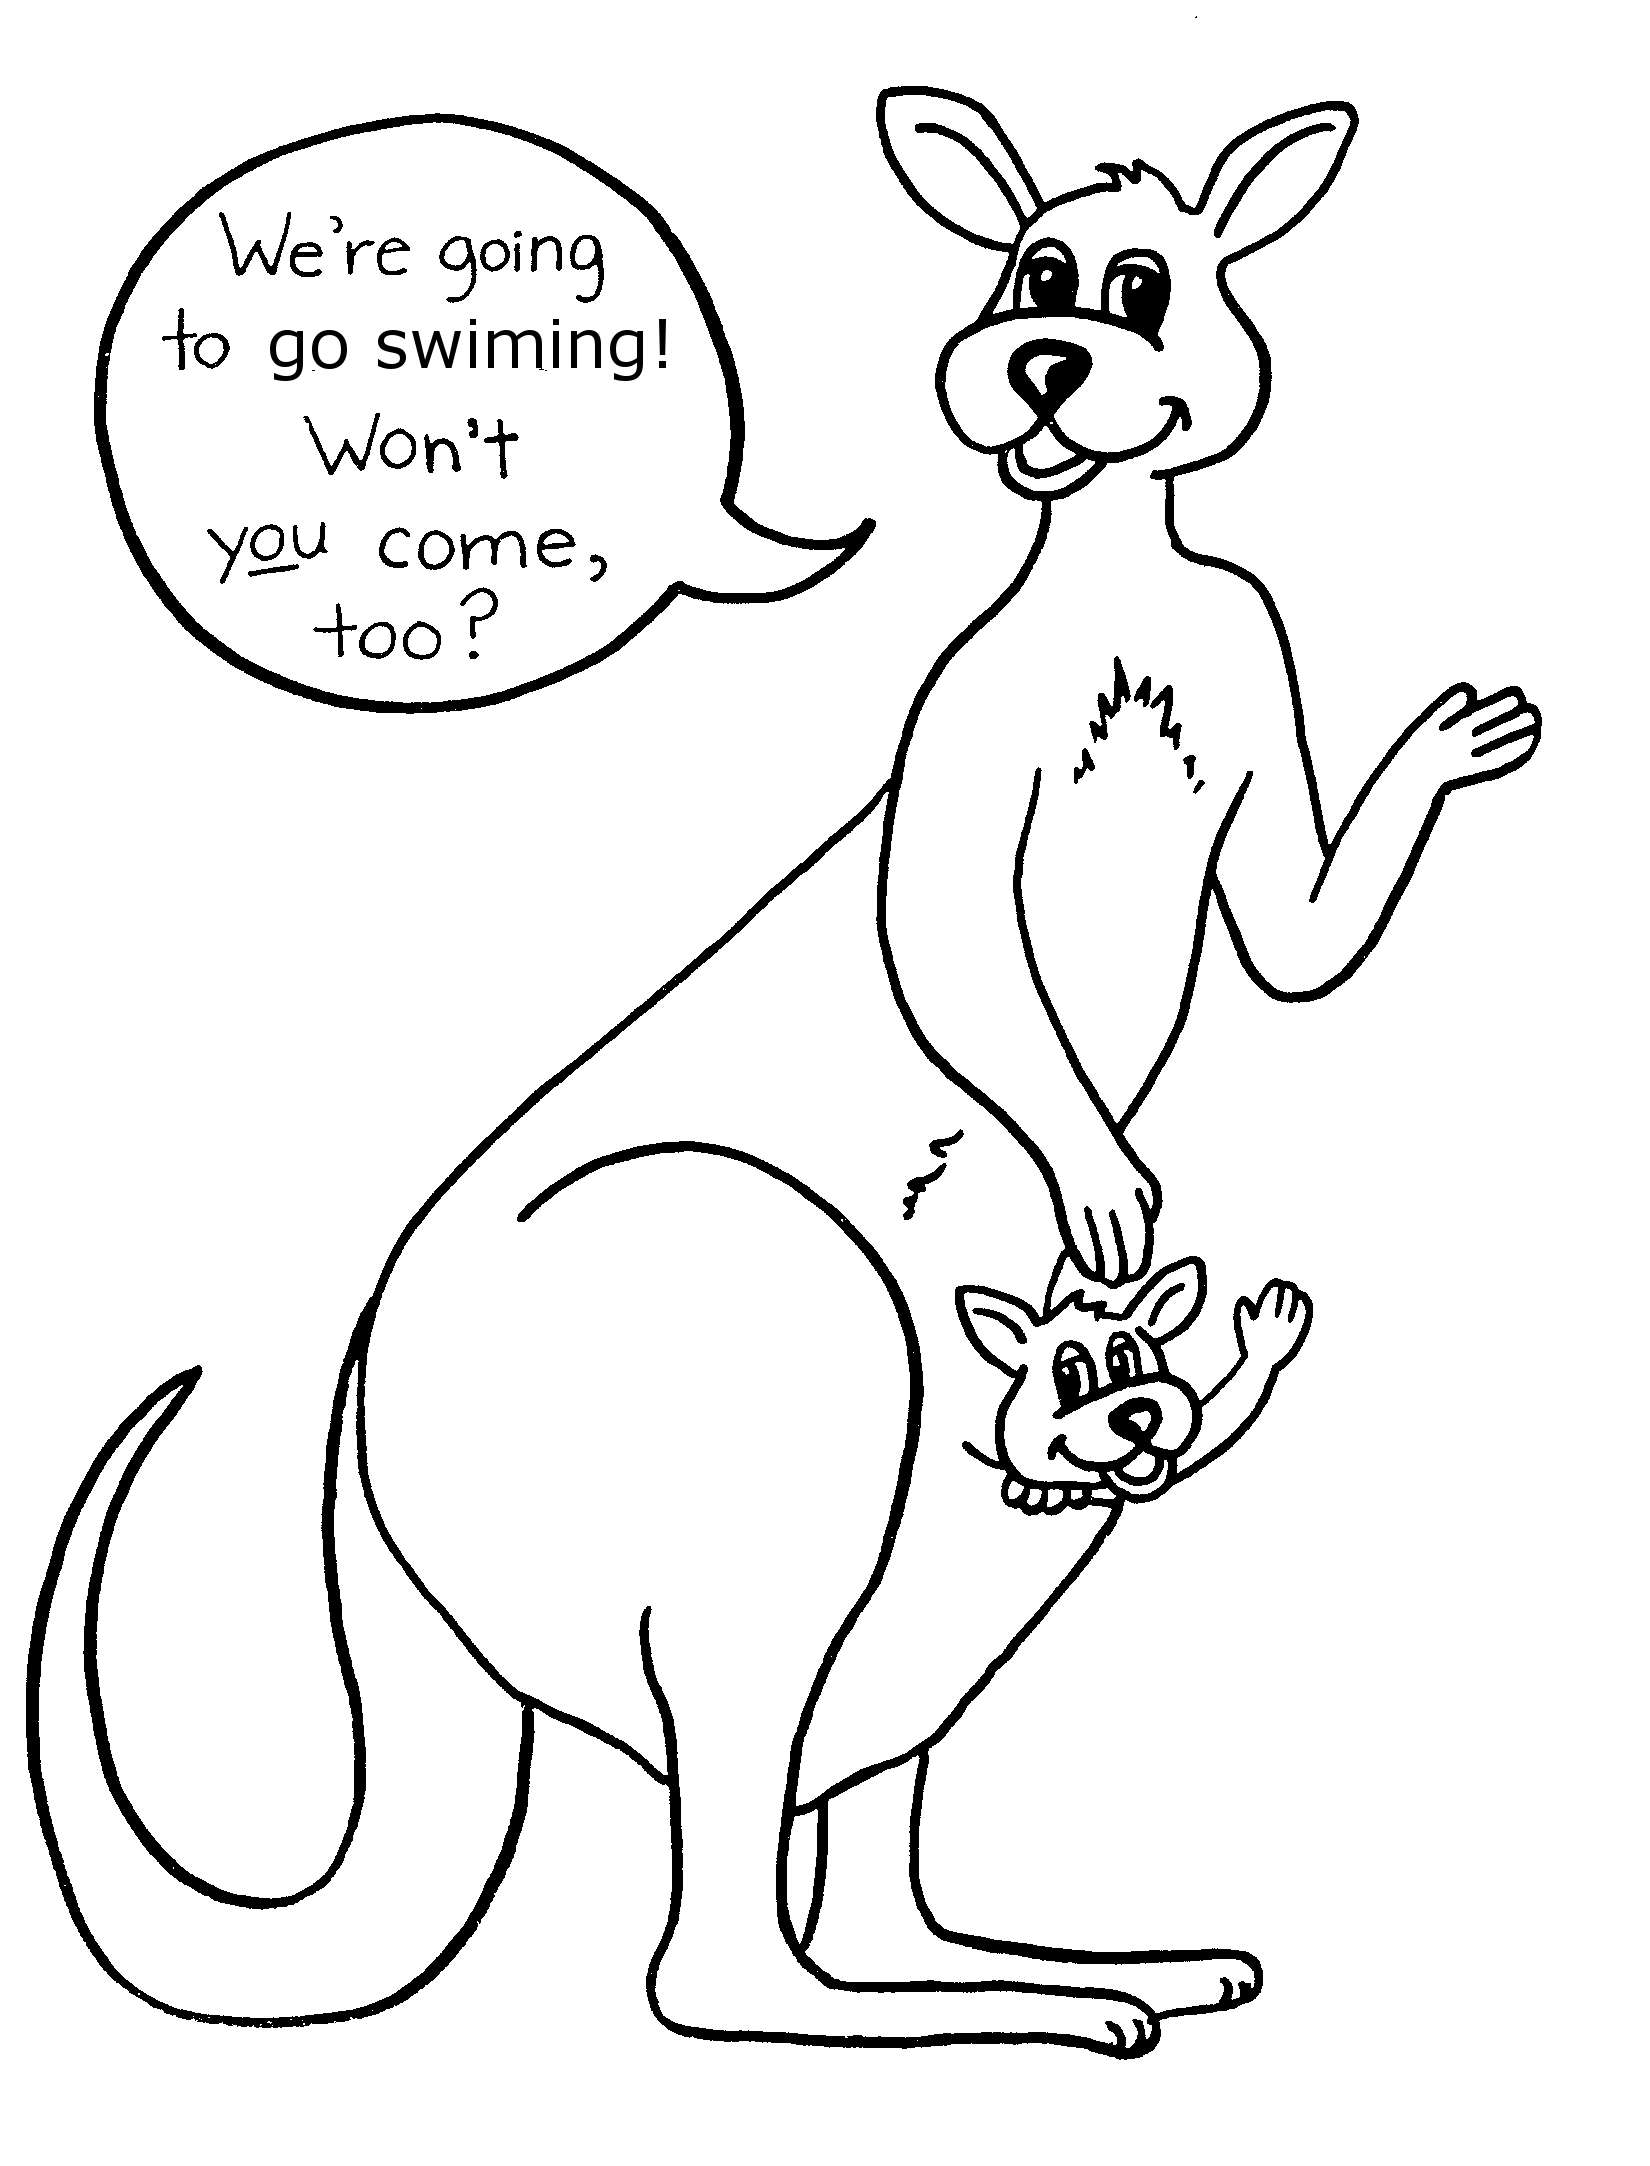 Download Free Printable Kangaroo Coloring Pages For Kids | Animal Place